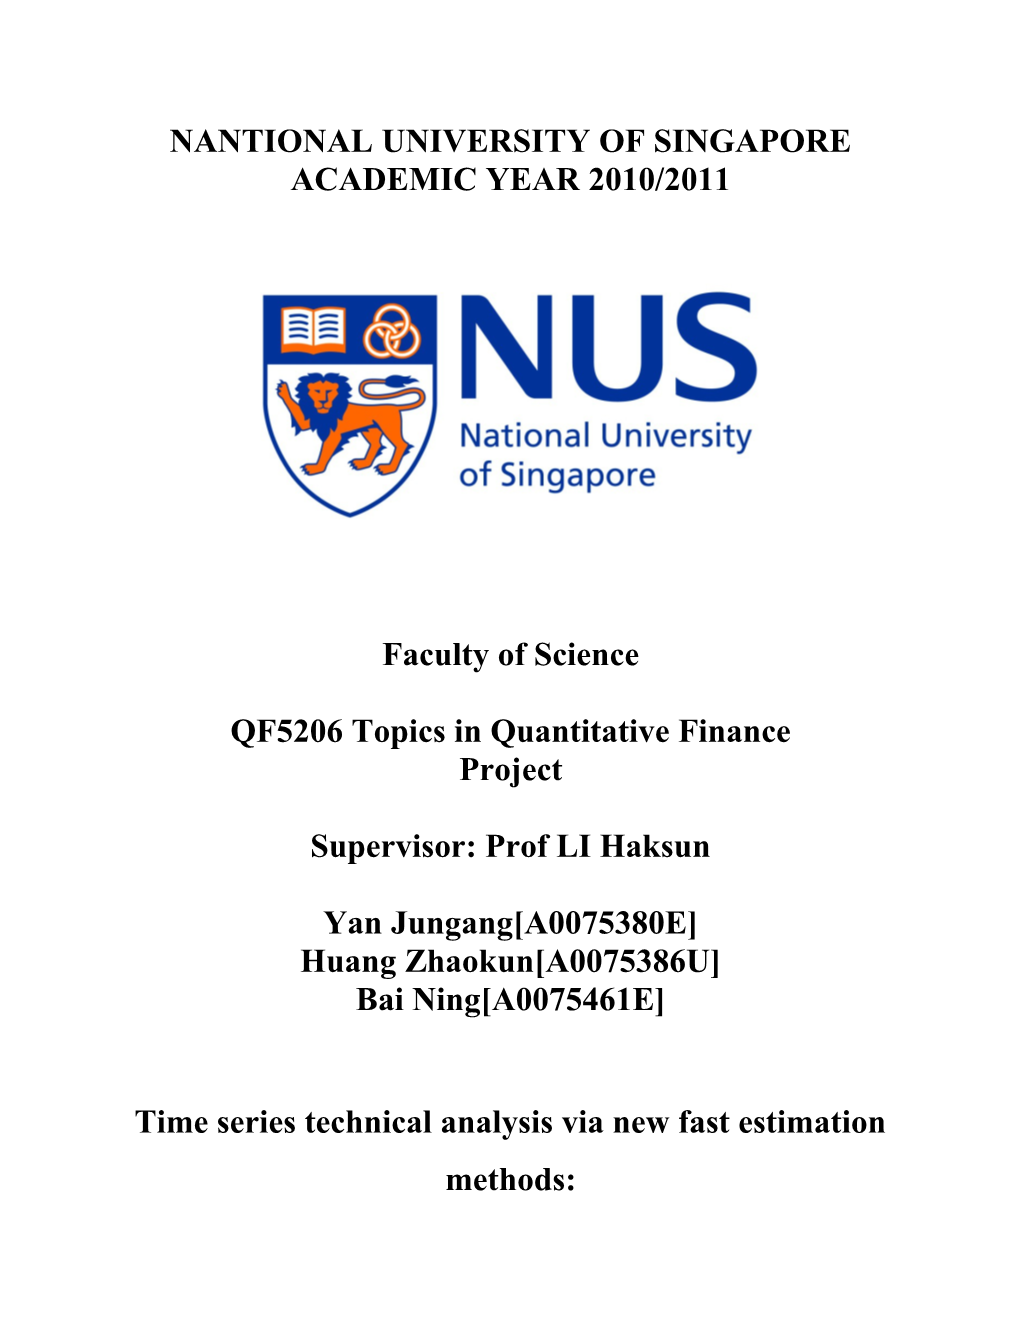 Nantional University of Singapore